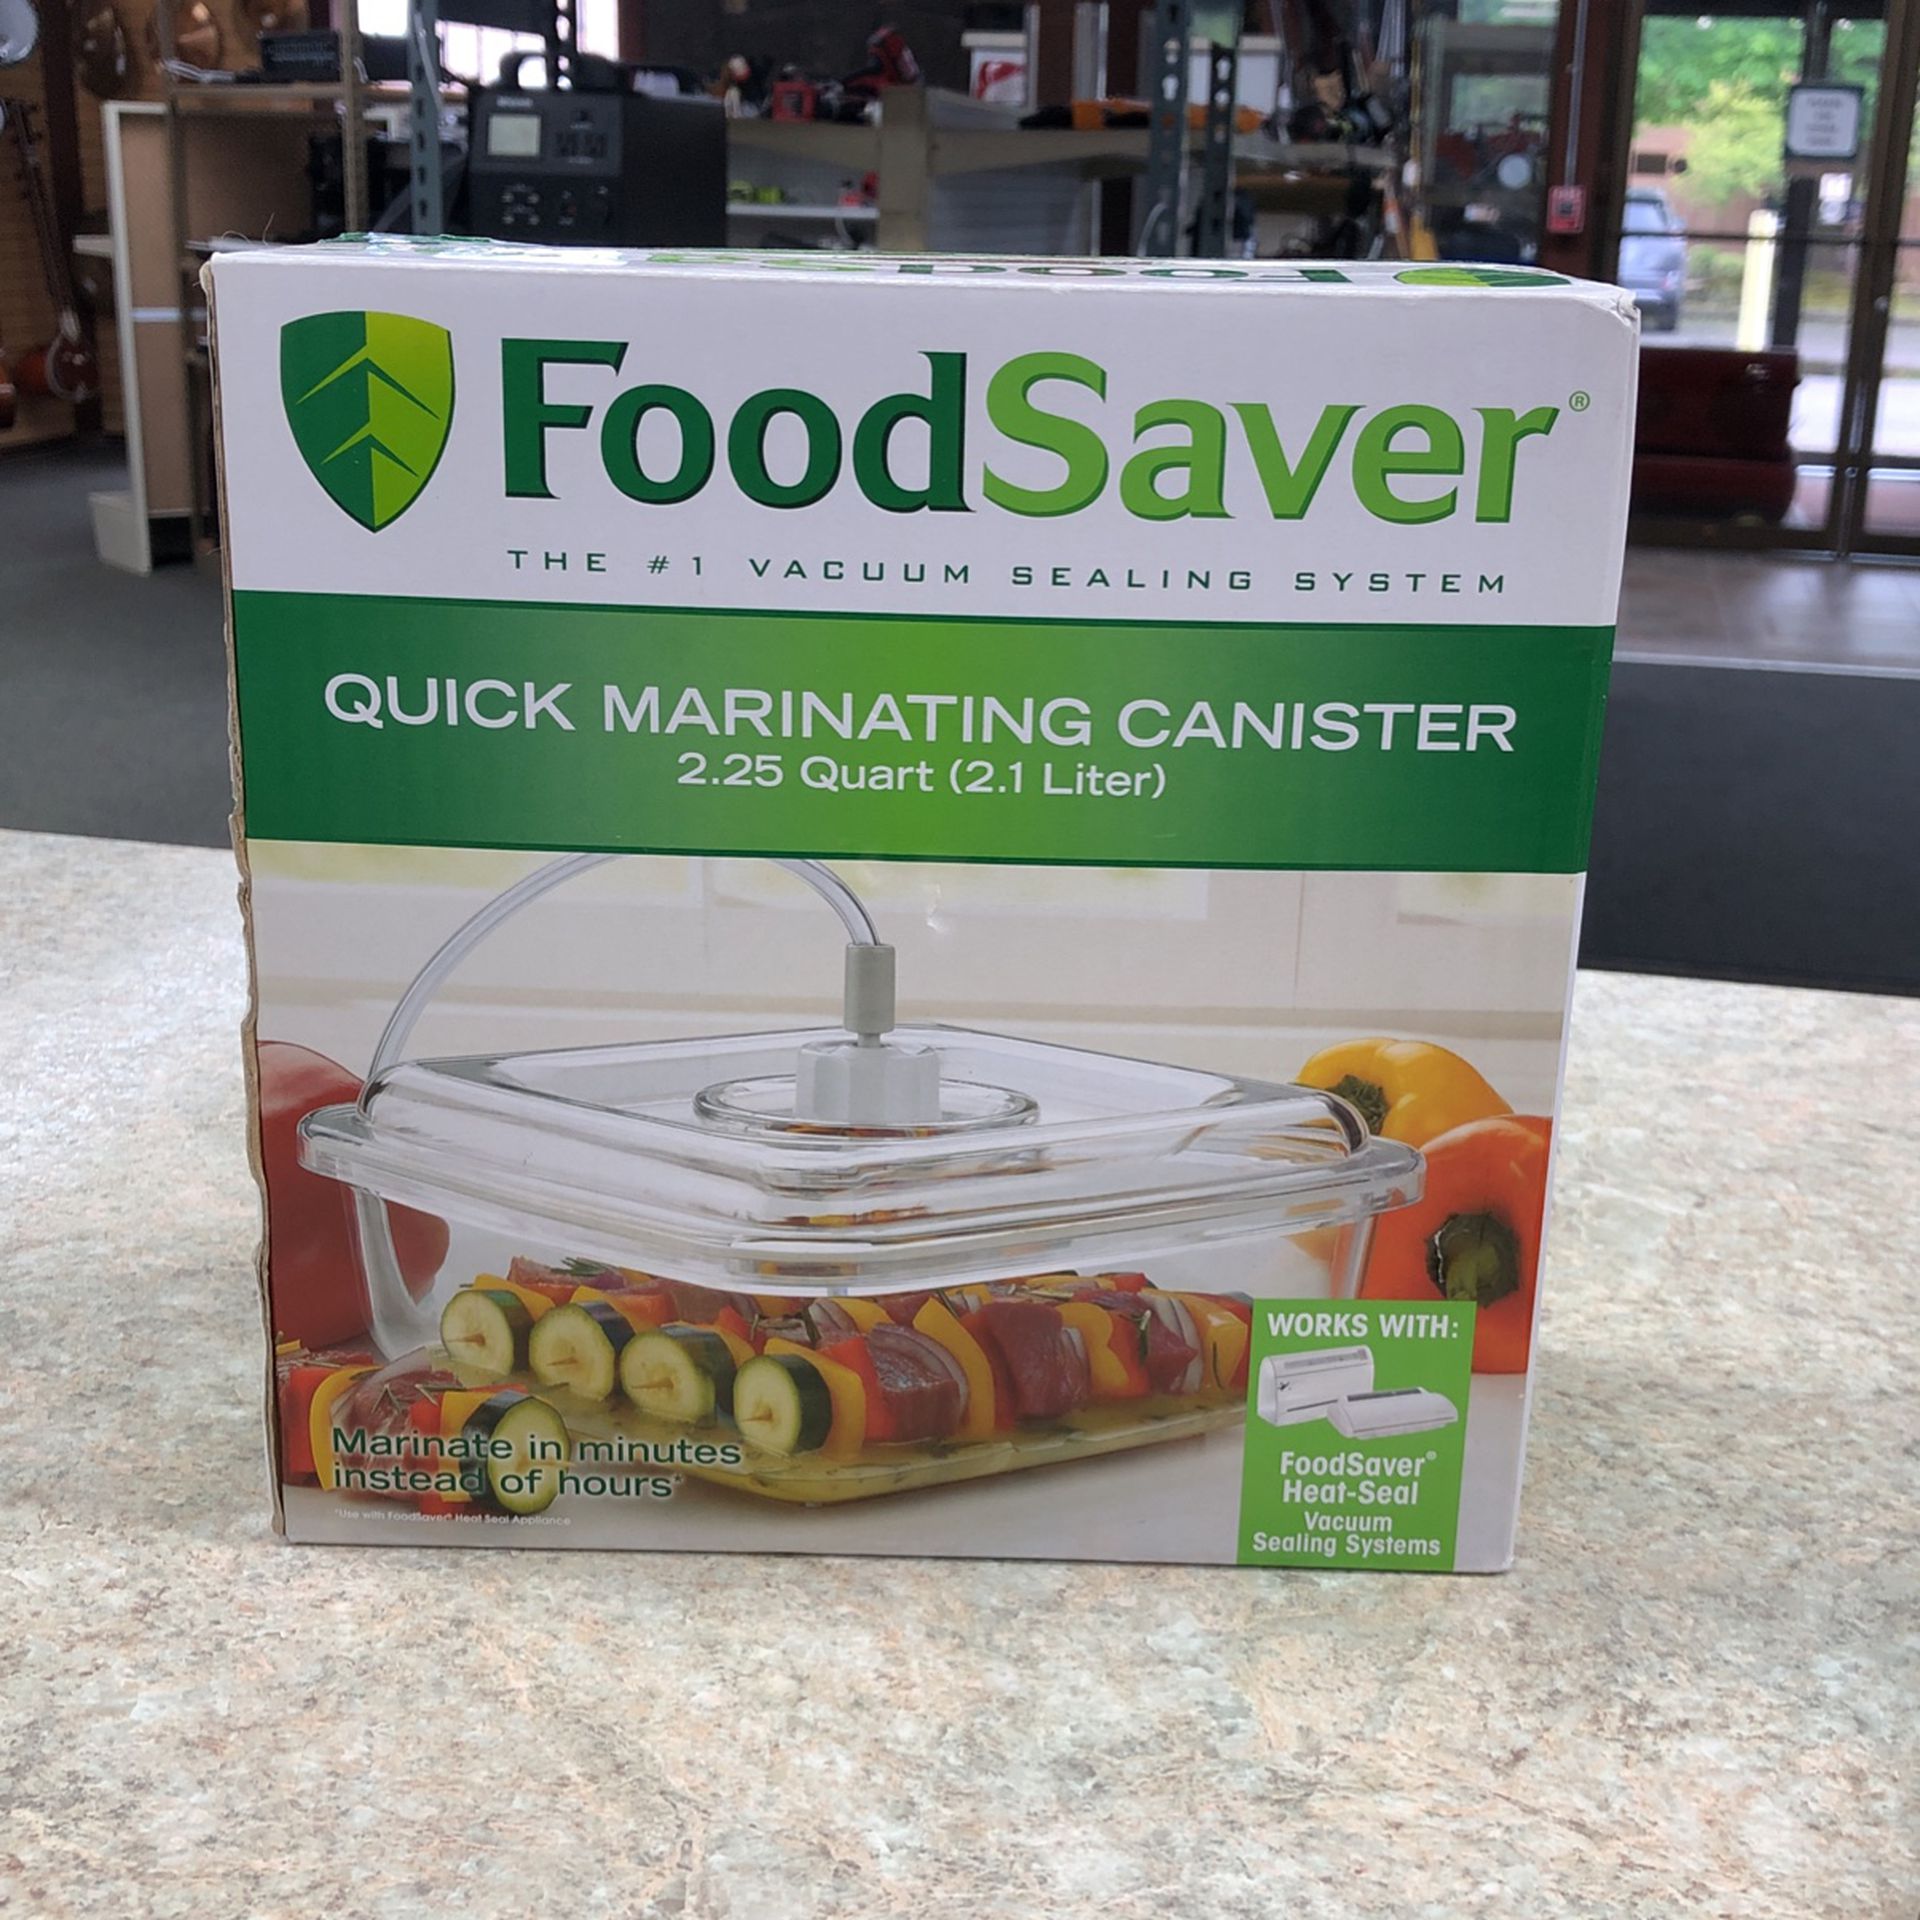 Food Saver Quick Marinating Canister 2.25 Quart 